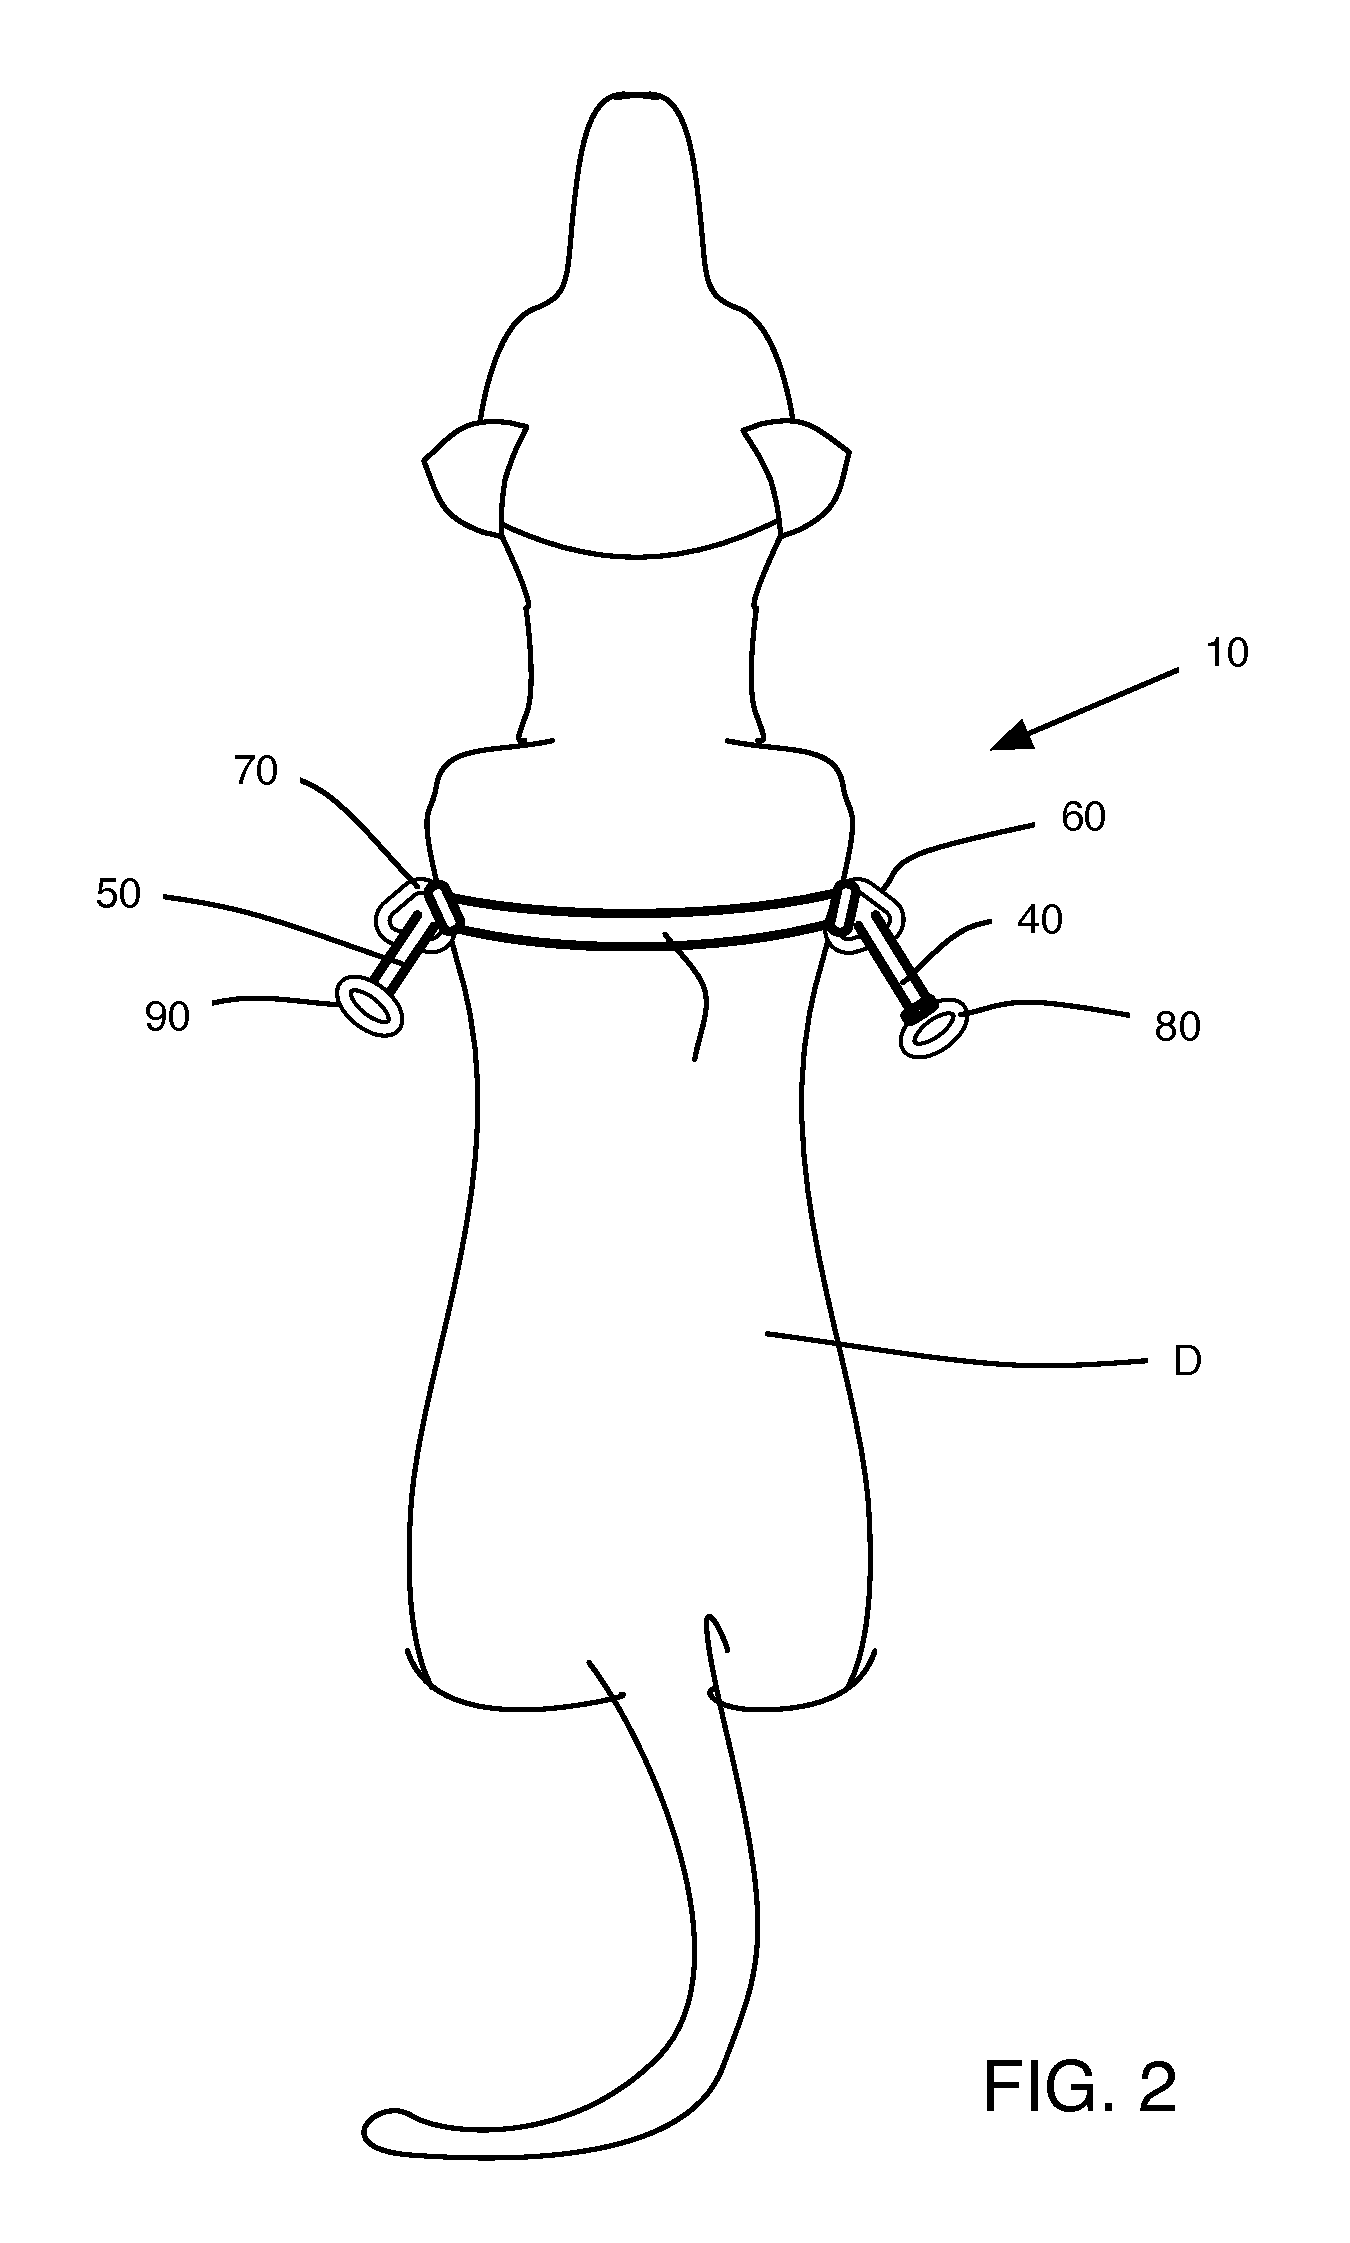 Animal harness device and method